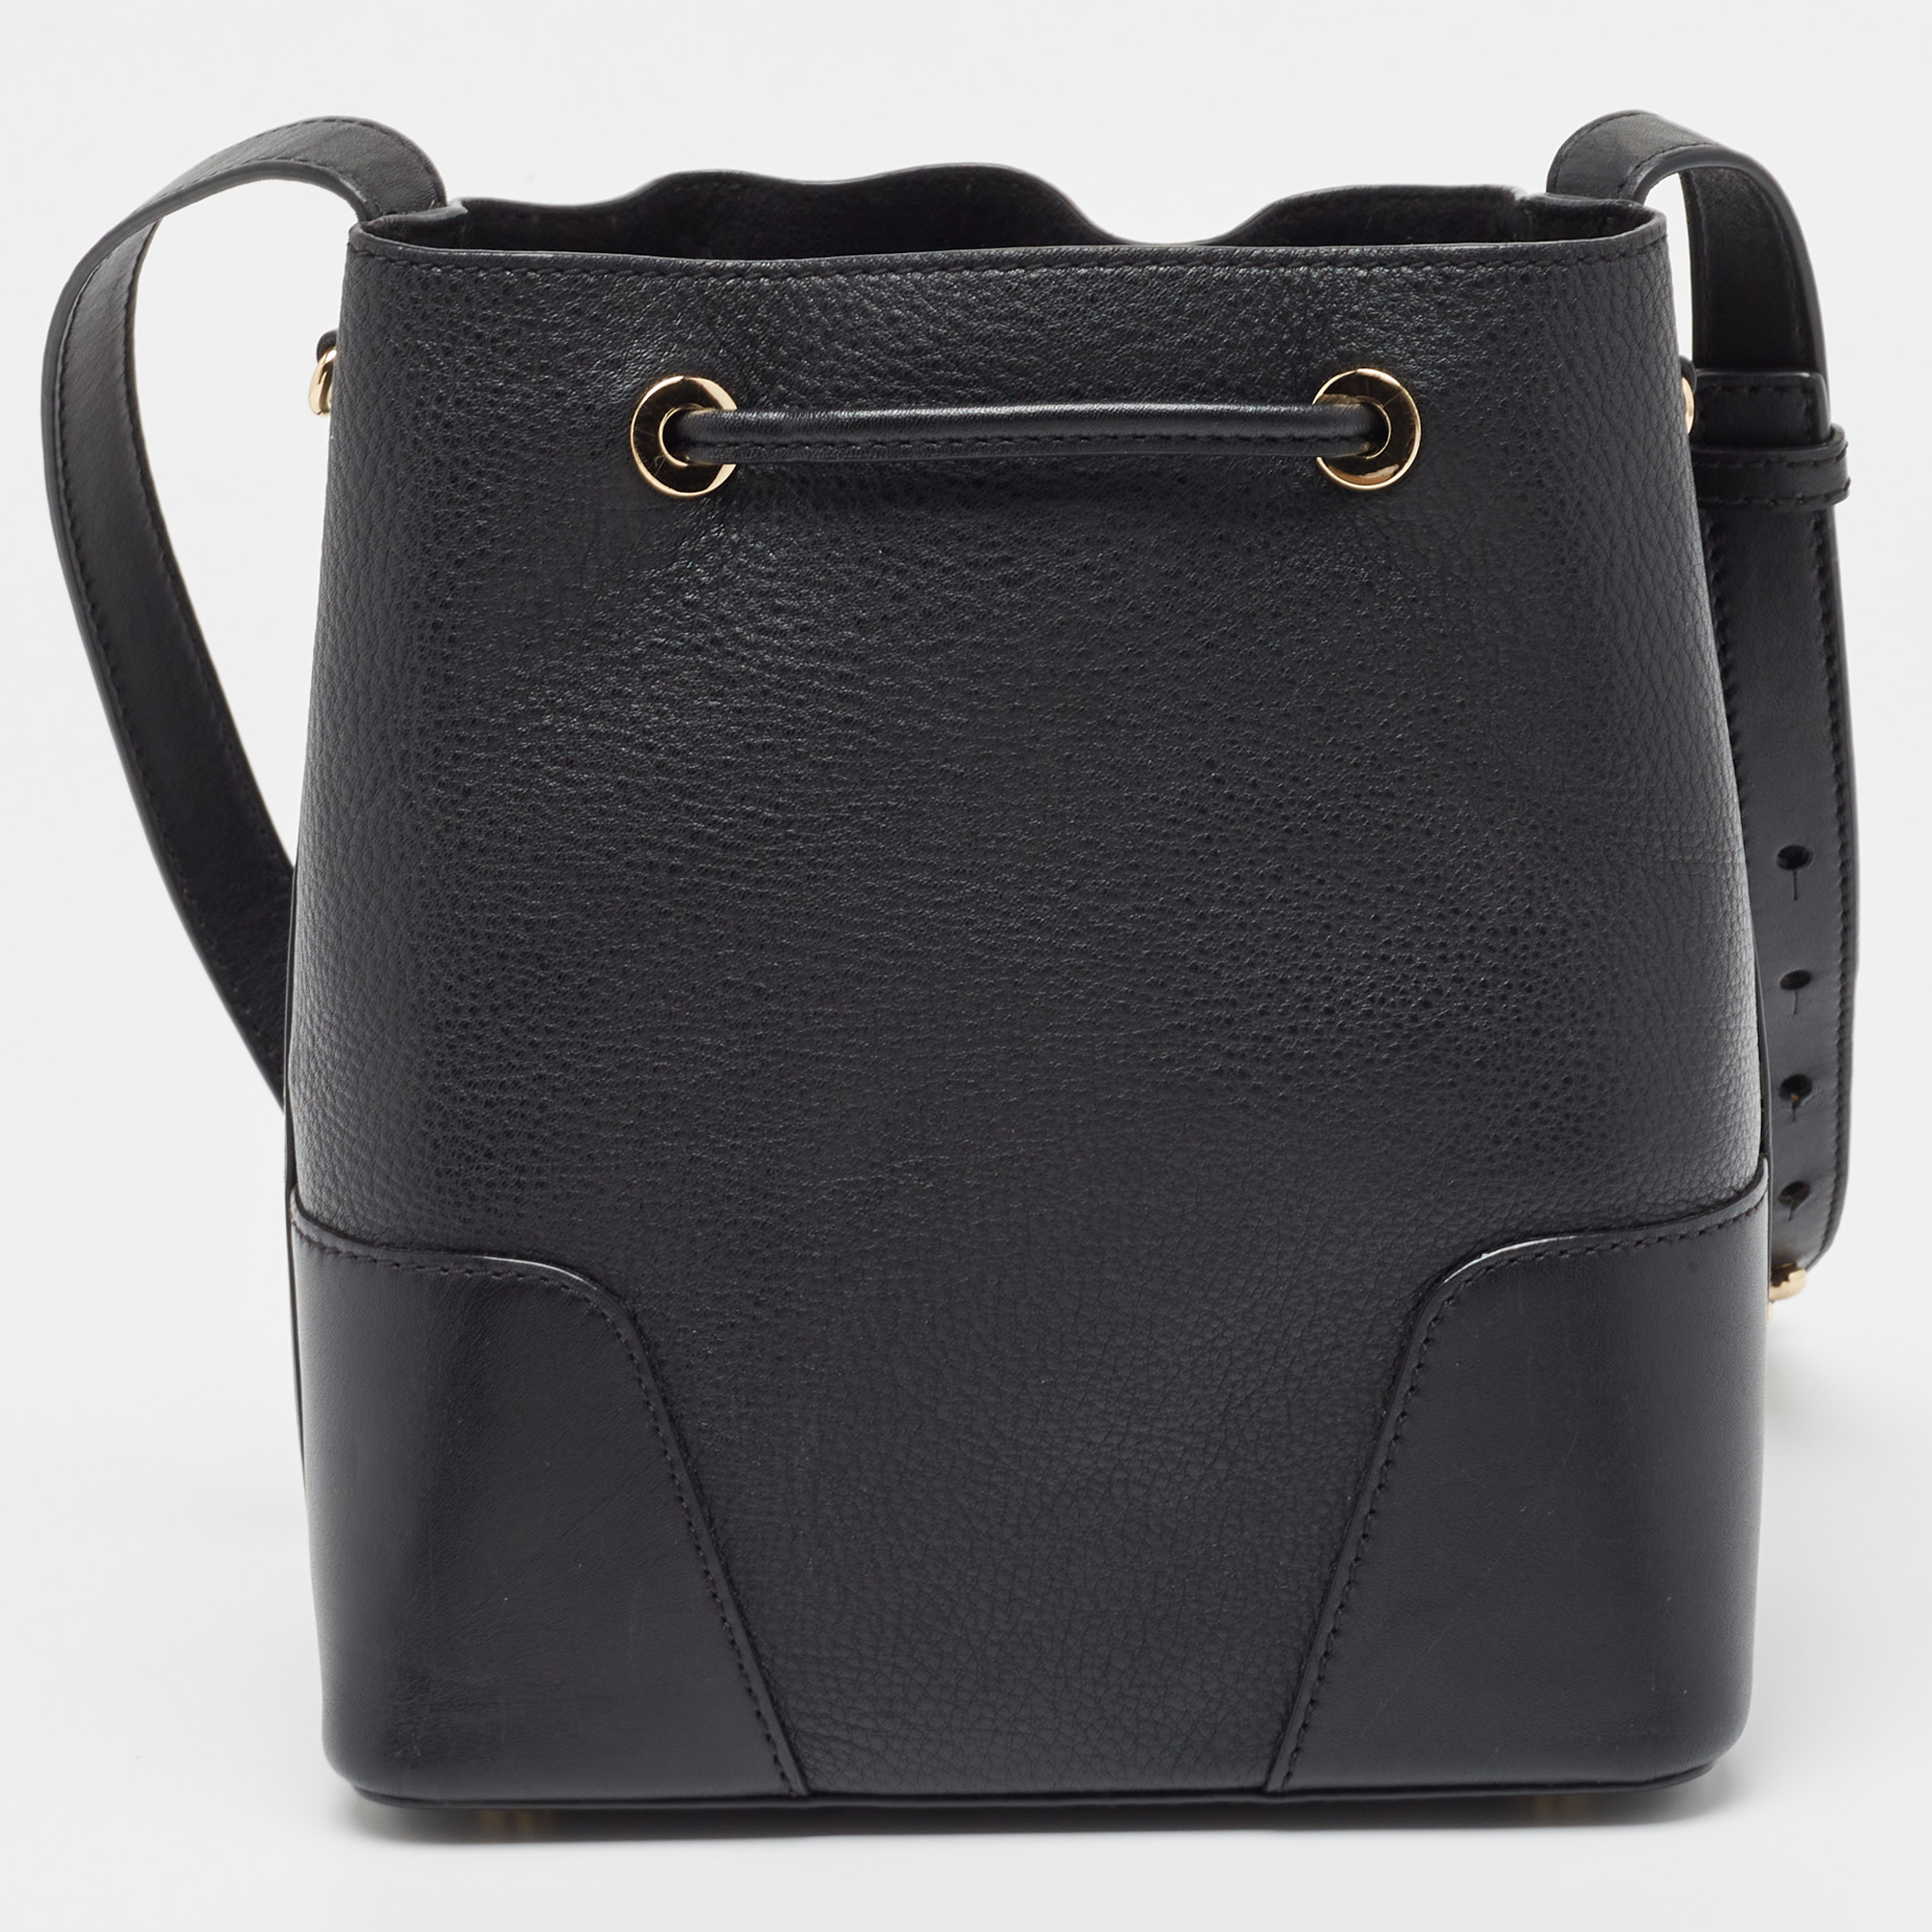 Michael Kors Black Leather Nicole Bucket Bag